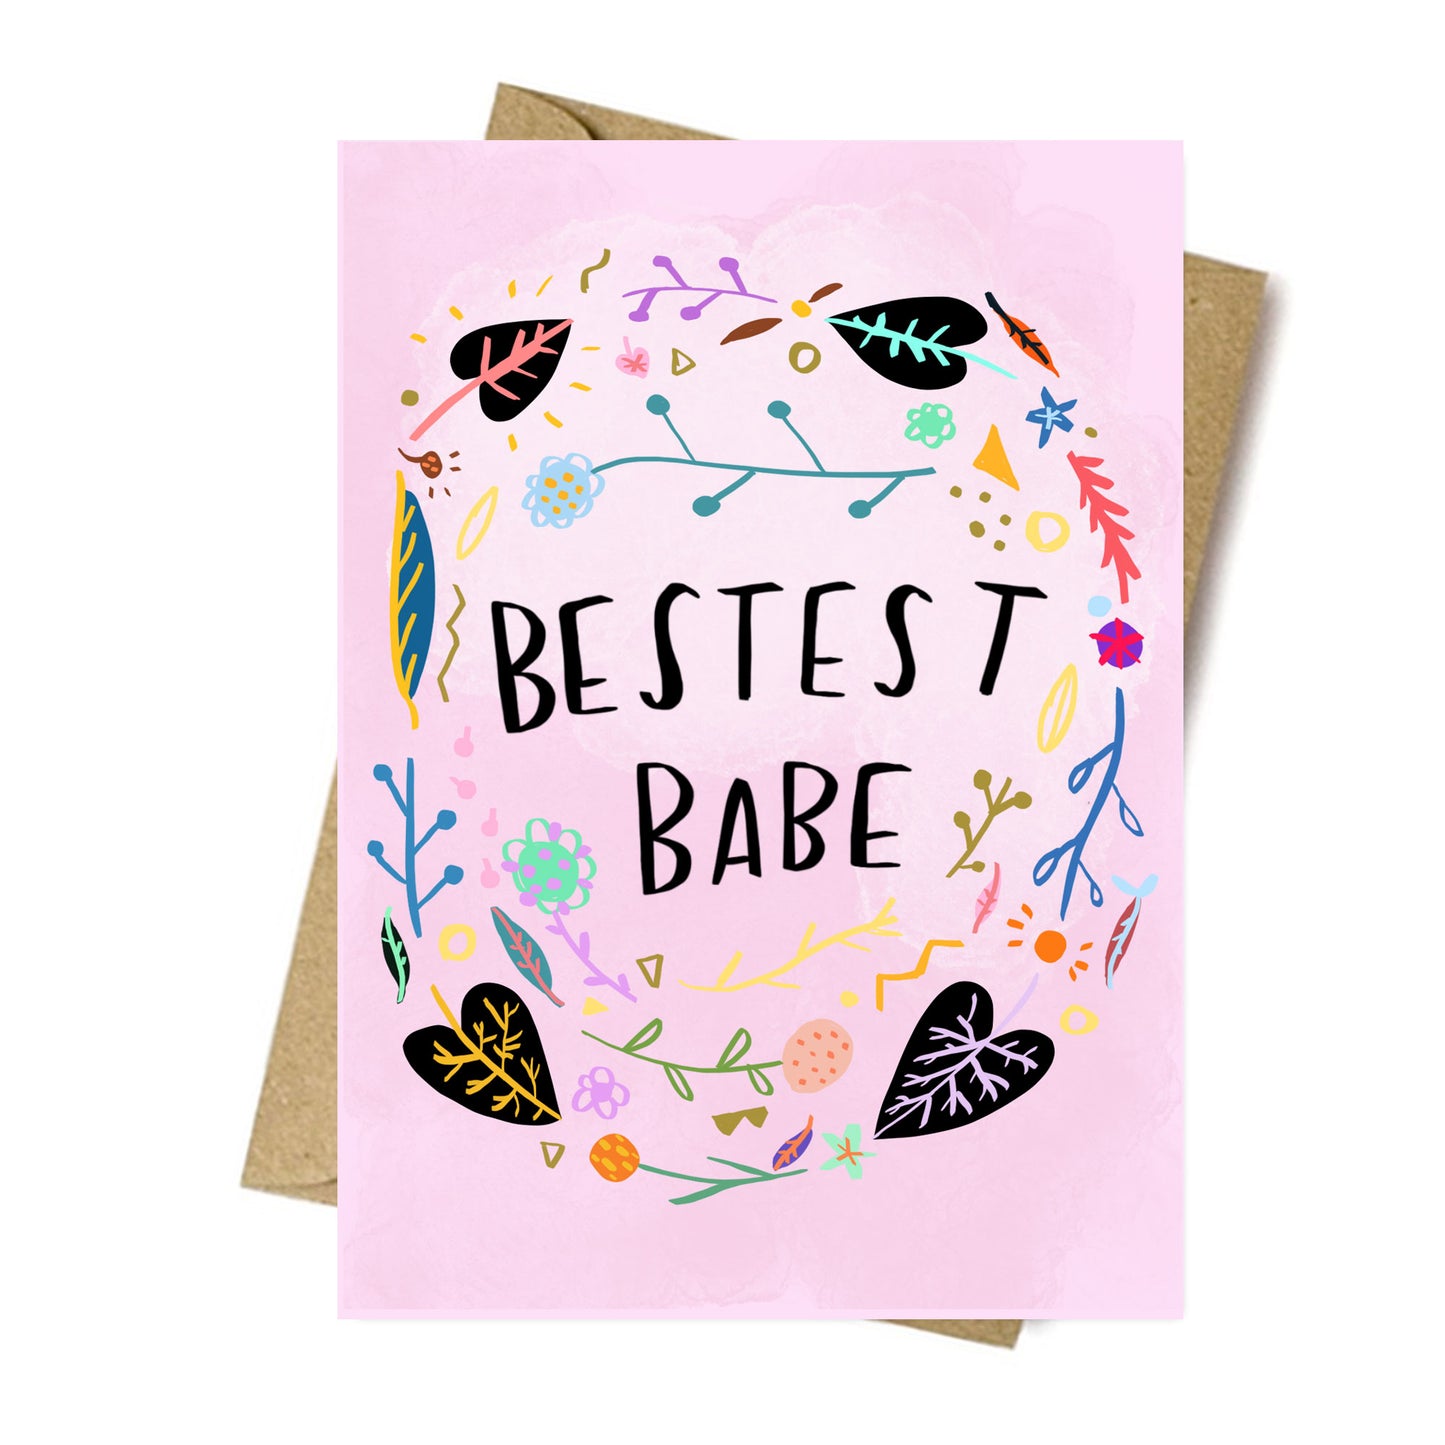 Bestest Babe card